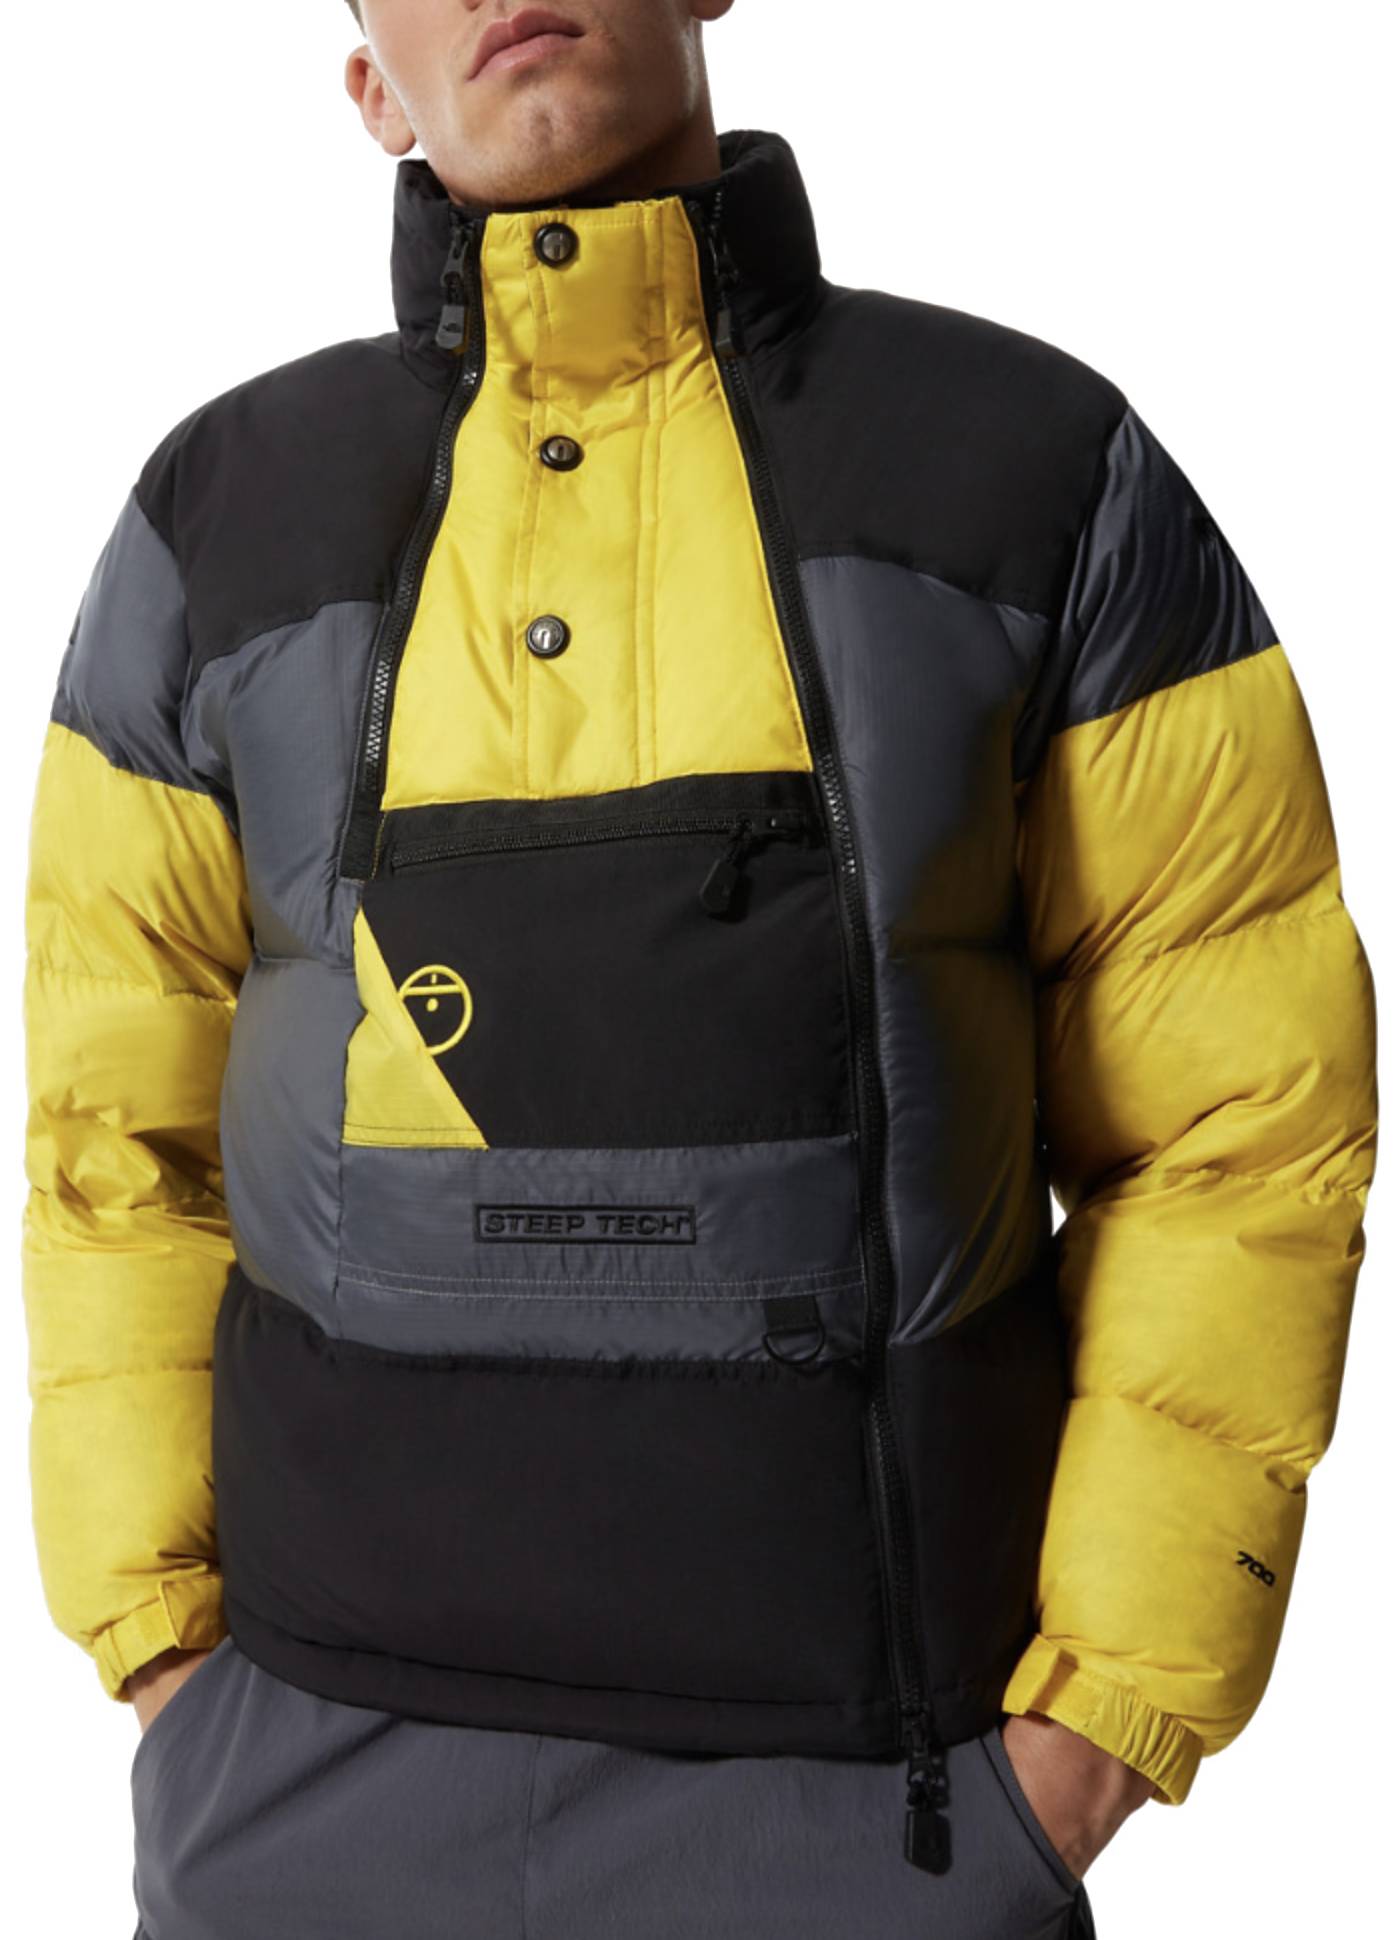 The North Face Jacket Steep Tech Down Jacket Grey Yellow Black | eBay